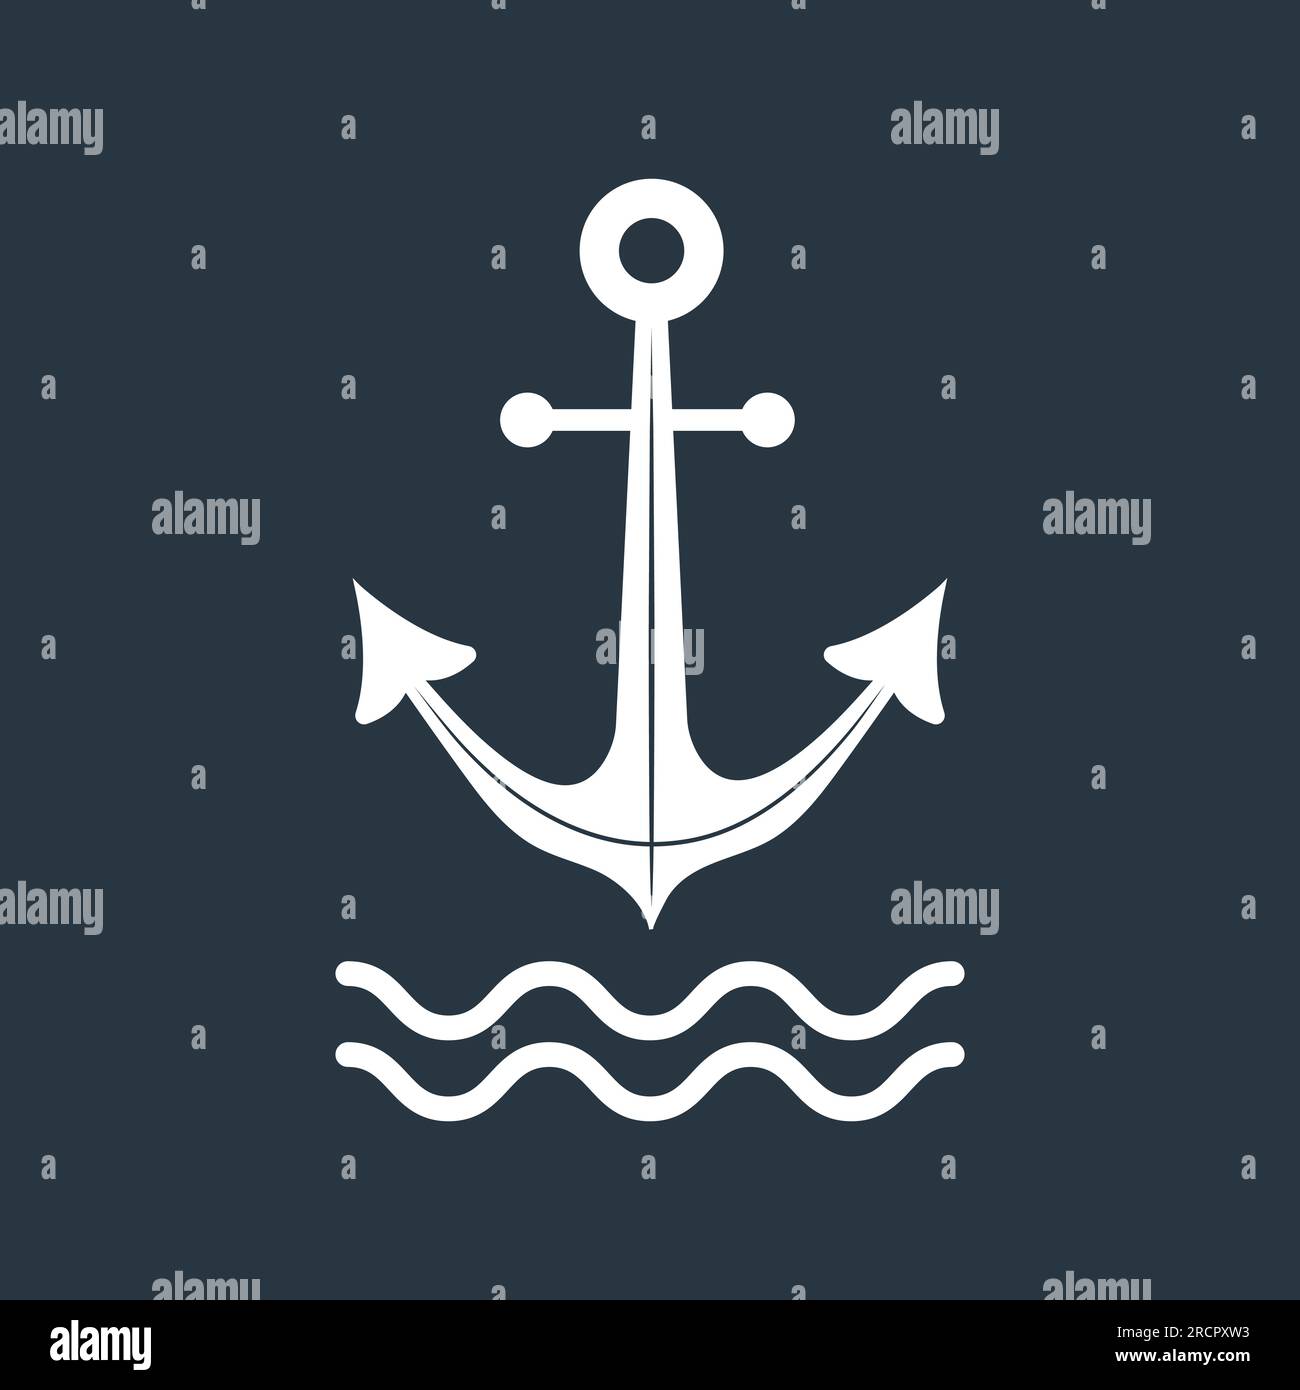 Anchor icon isolated on dark background. Marine logo. Nautical symbol. Vector illustration in flat style Stock Vector